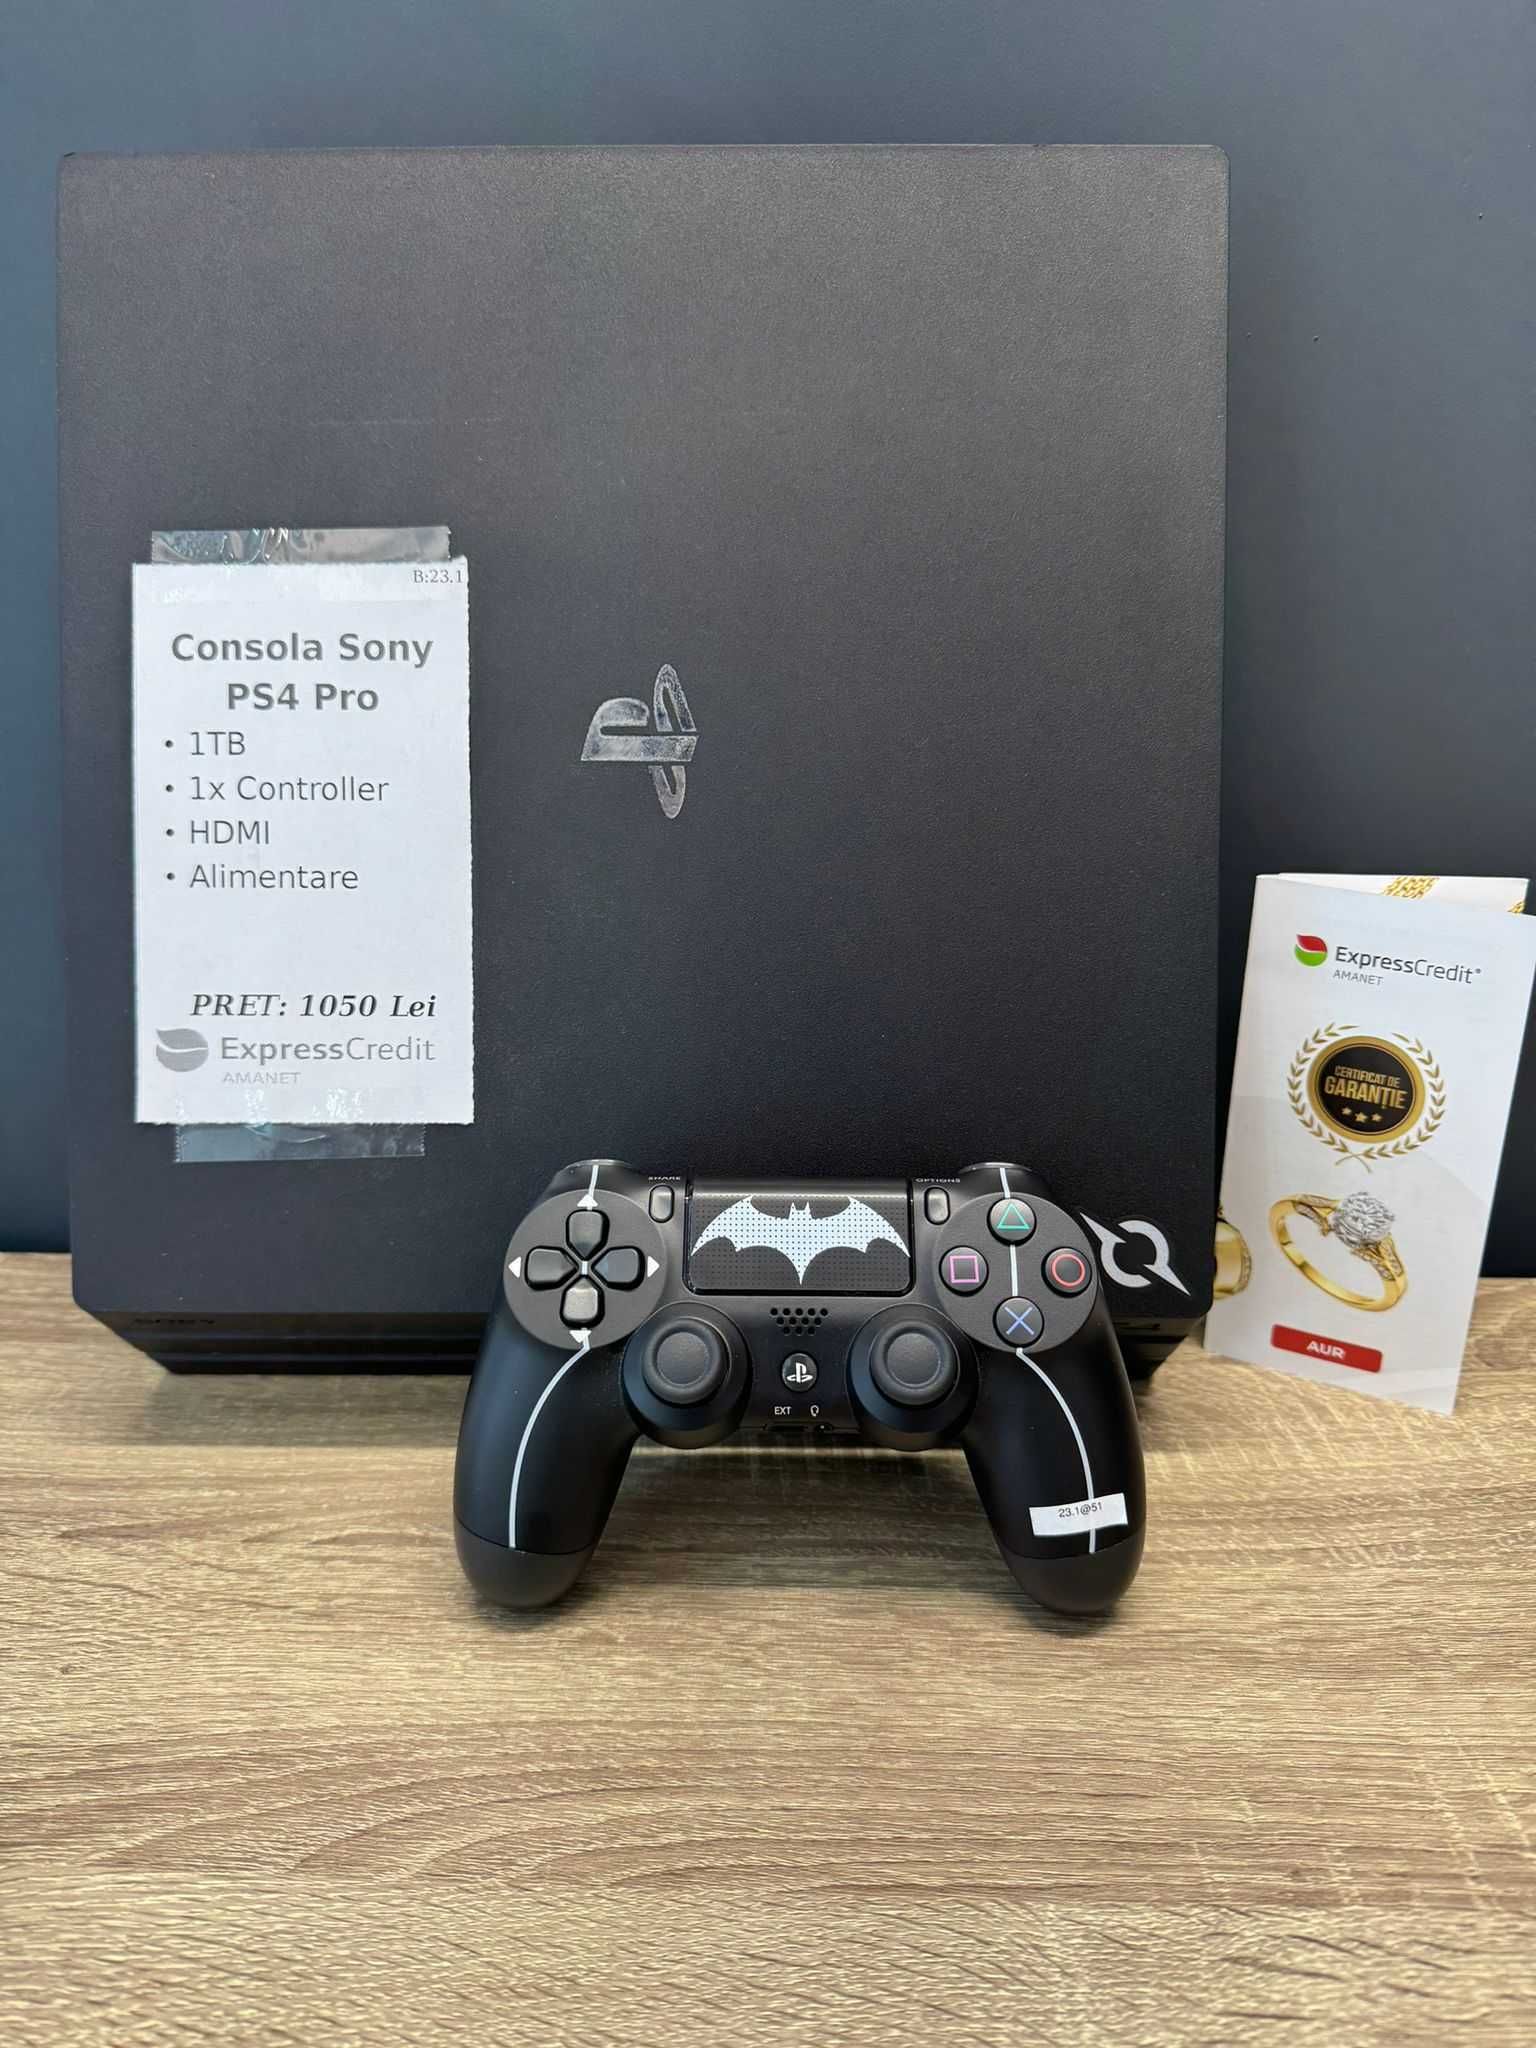 (AG51) Consola Sony Playstation 4 Pro B.23 - 1050 Lei